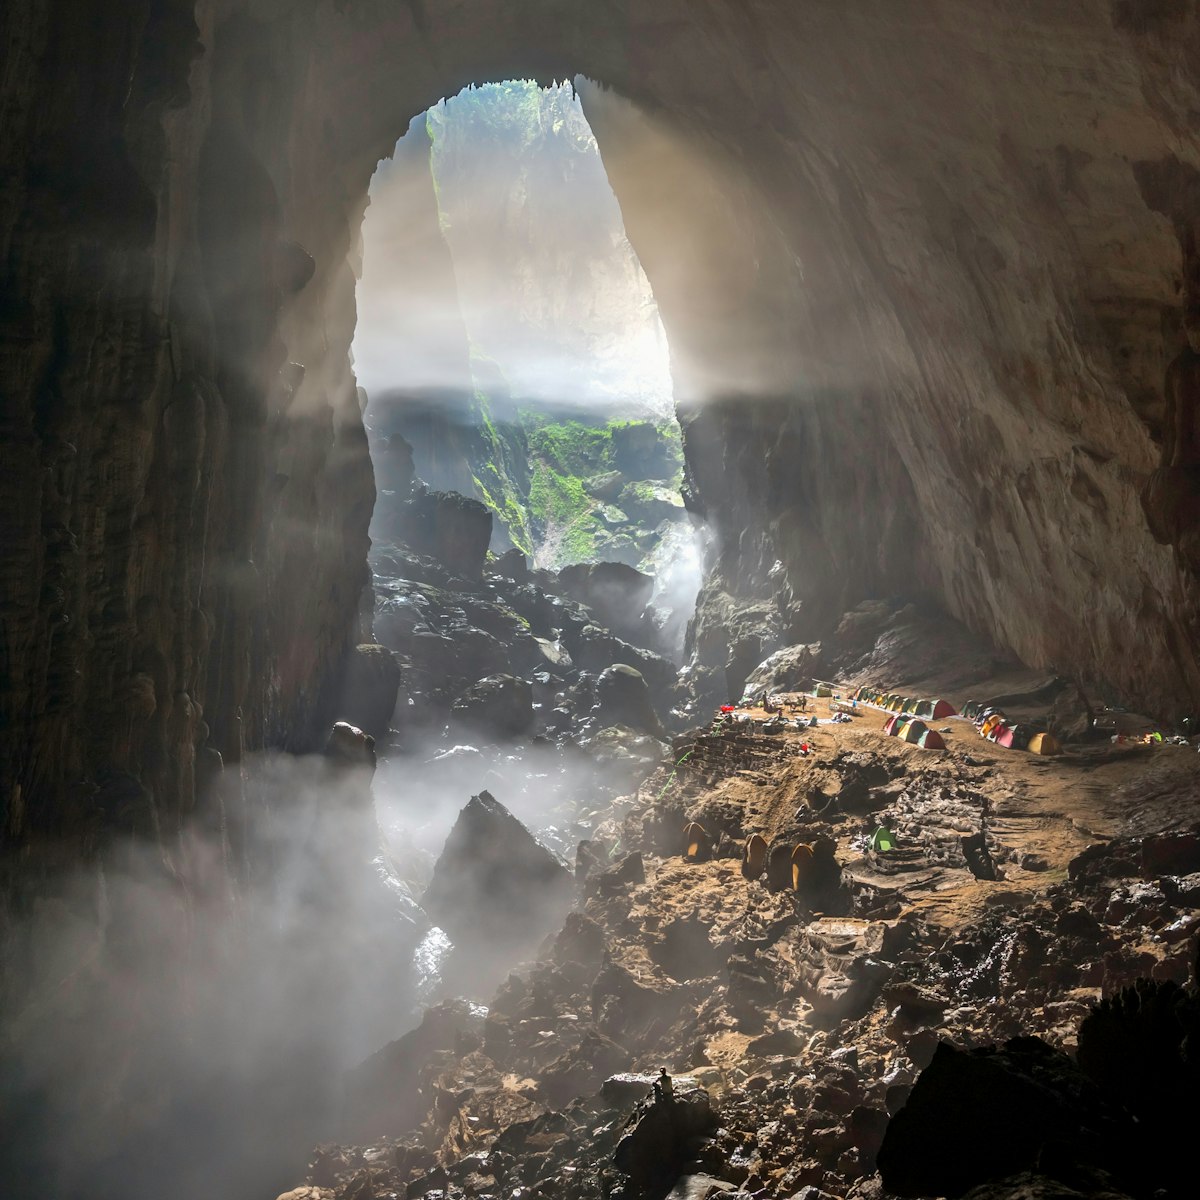 Hang Son Doong cave in the heart of the Phong Nha-Ke Bang National Park in Vietnam.